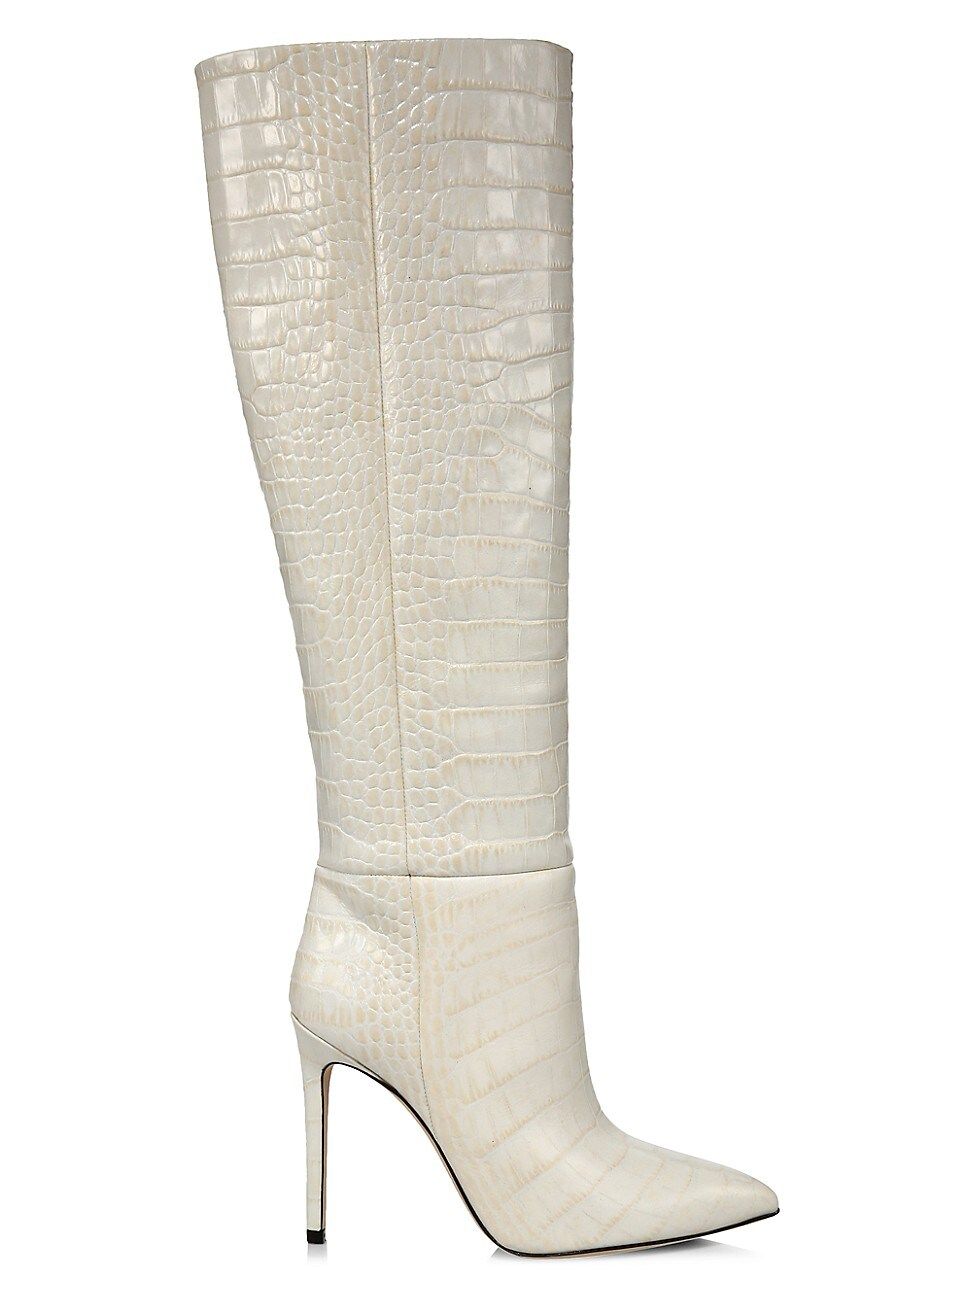 Paris Texas Women's Knee-High Croc-Embossed Leather Boots - Avoiro - Size 41 (11) | Saks Fifth Avenue